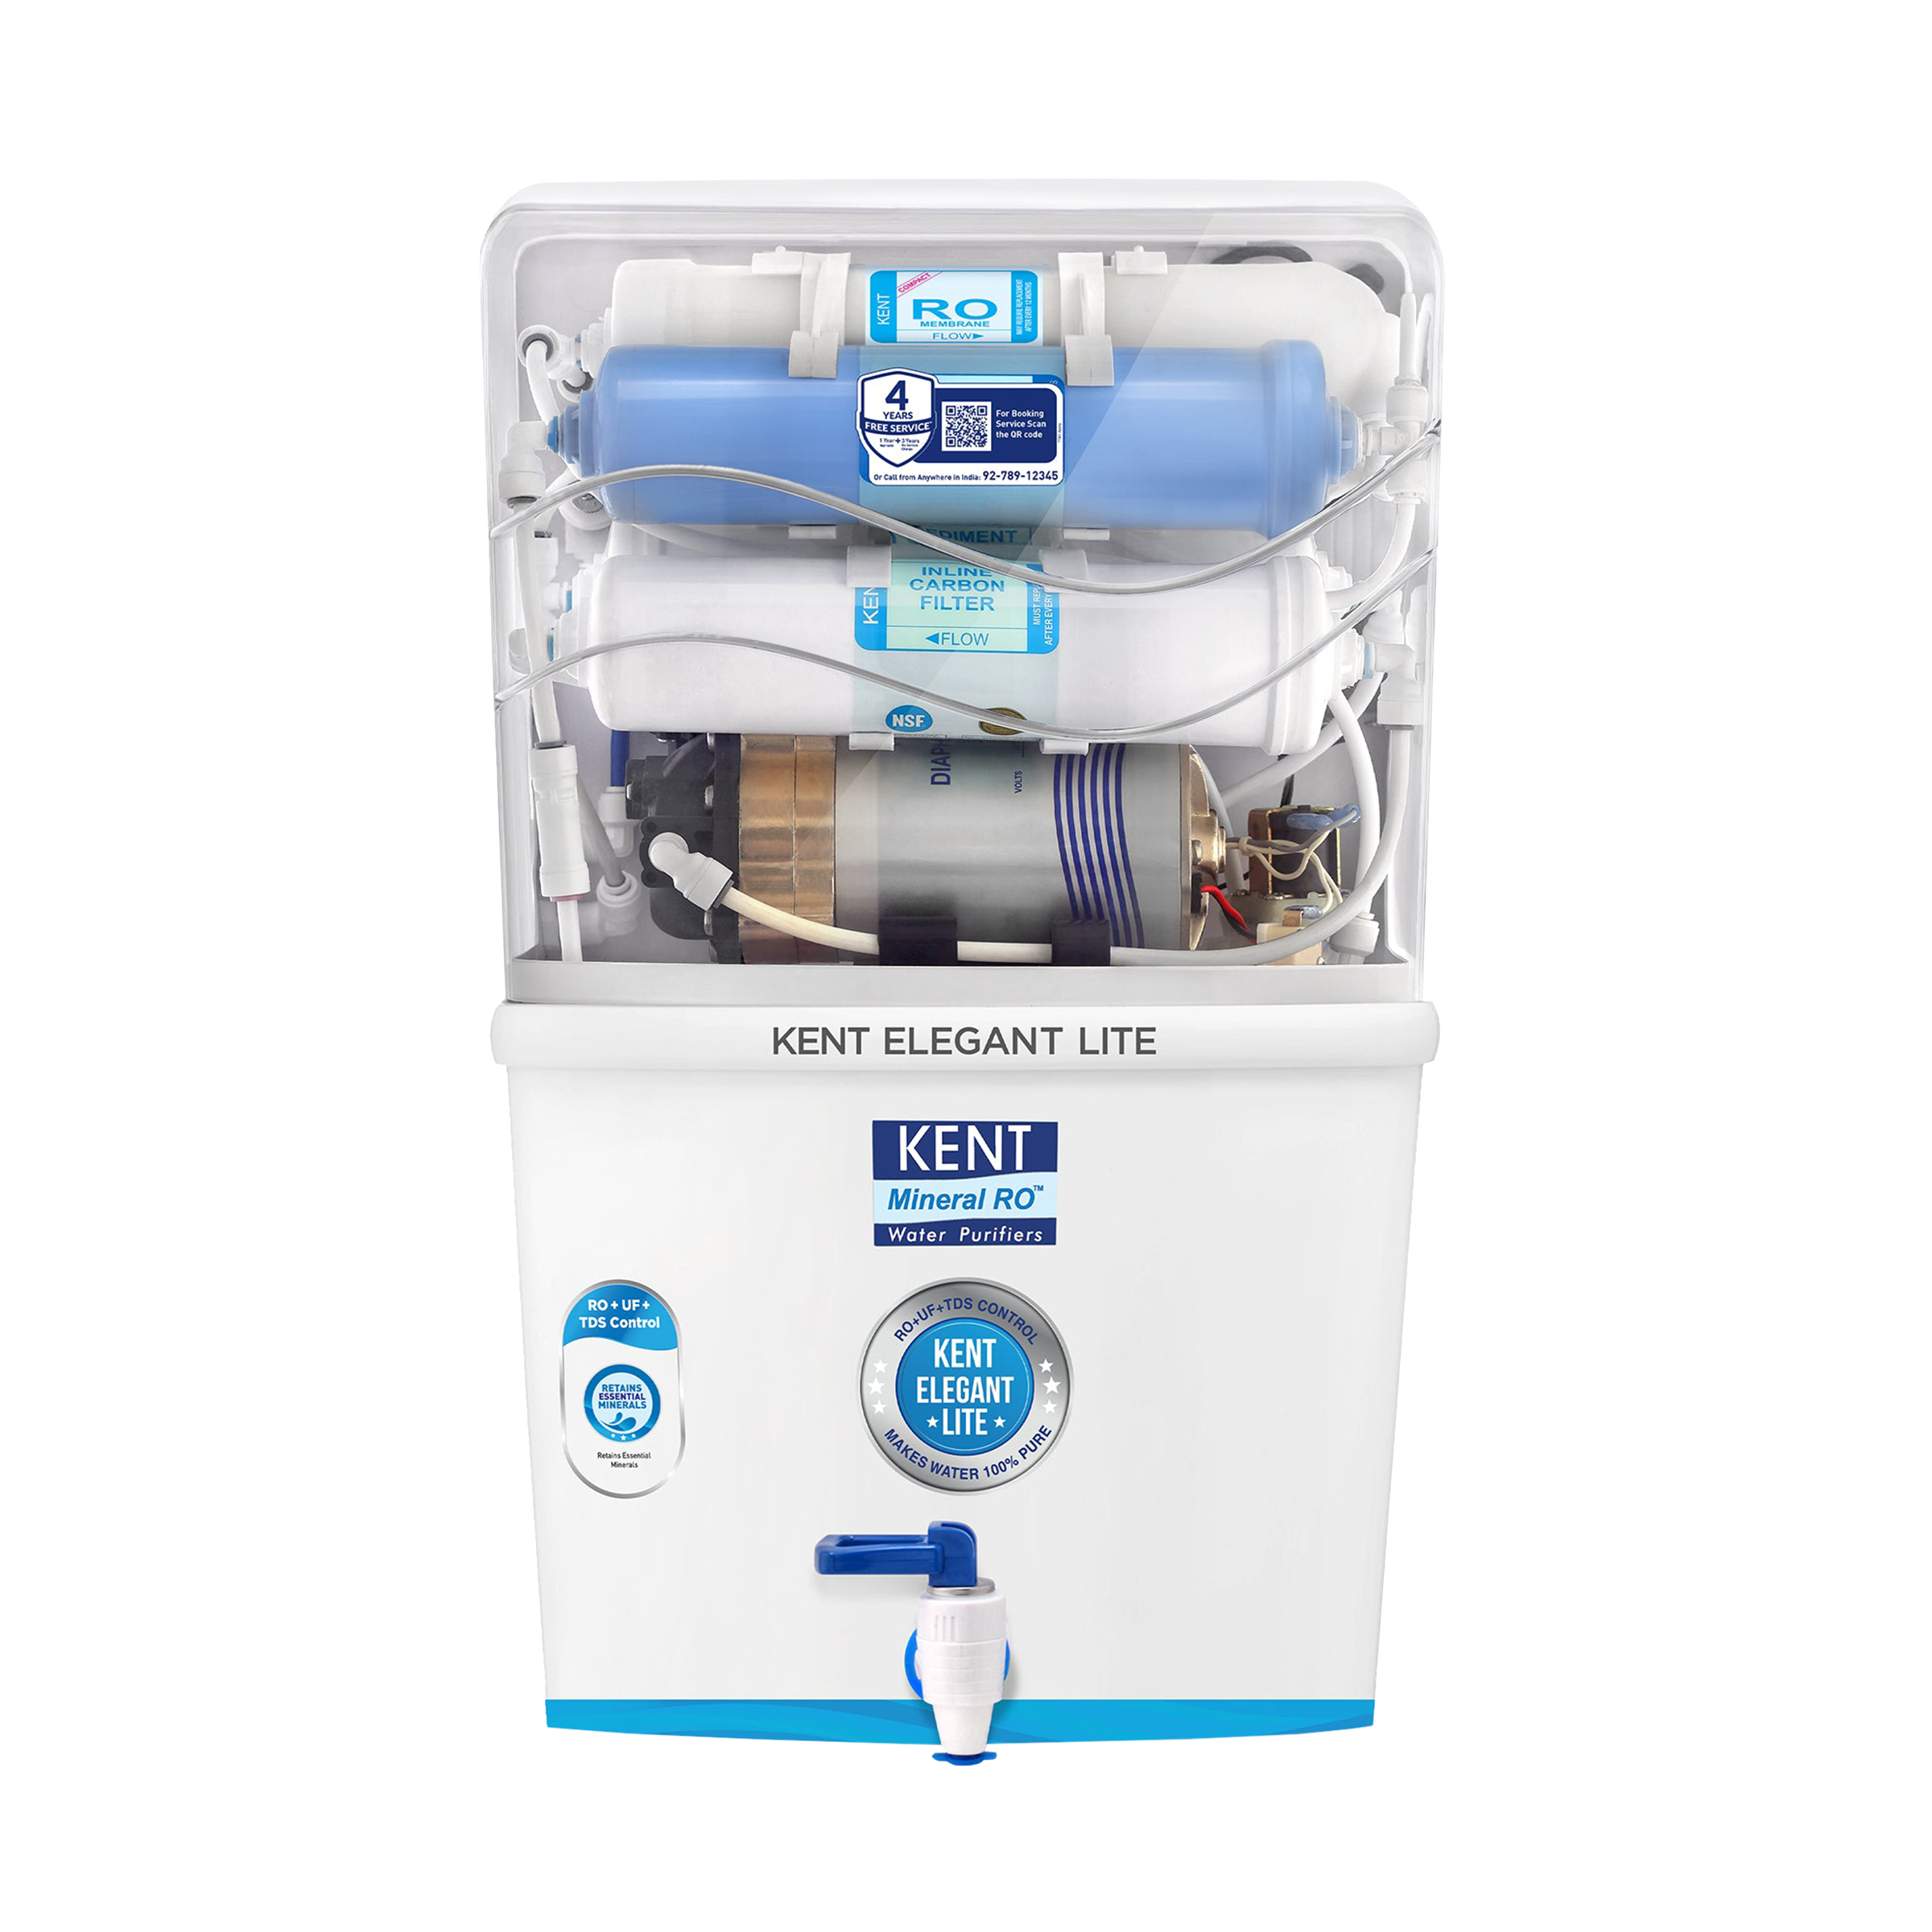 Kent Elegant Lite RO+UF+TDS Electrical Water Purifier (Multiple Purification Process, 11120, White)_1